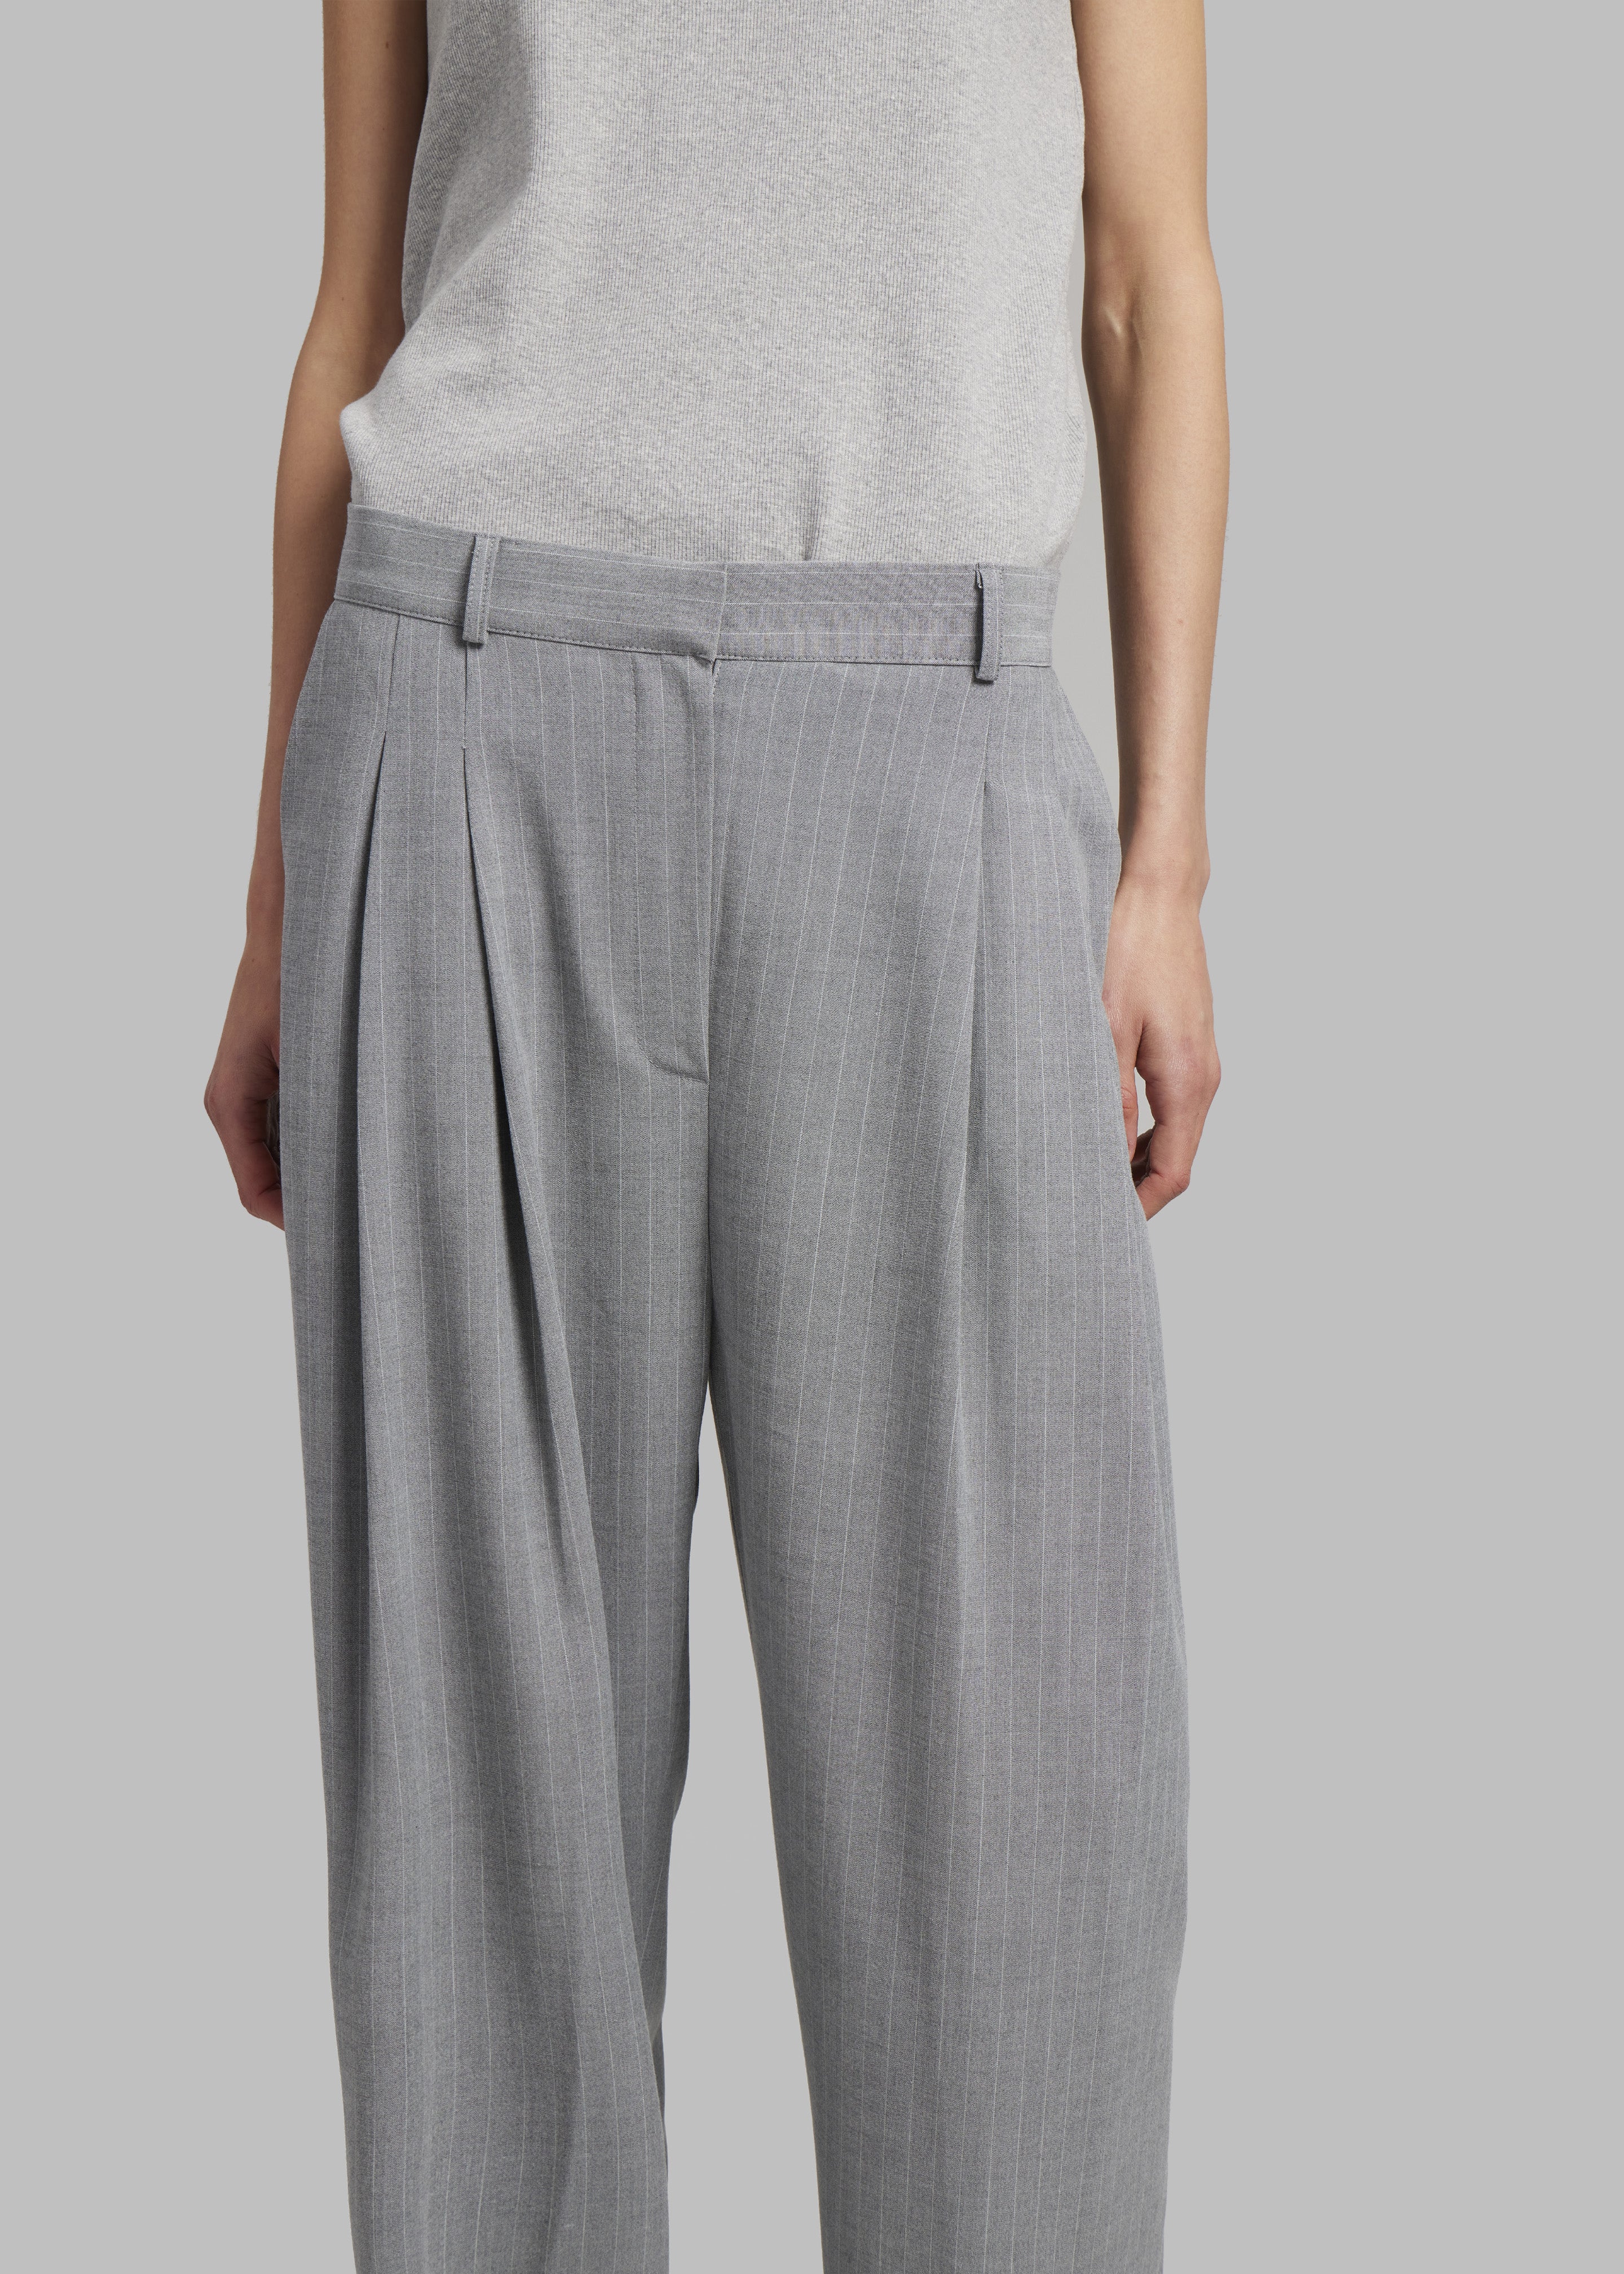 Sybil Trousers - Grey Pinstripe - 4